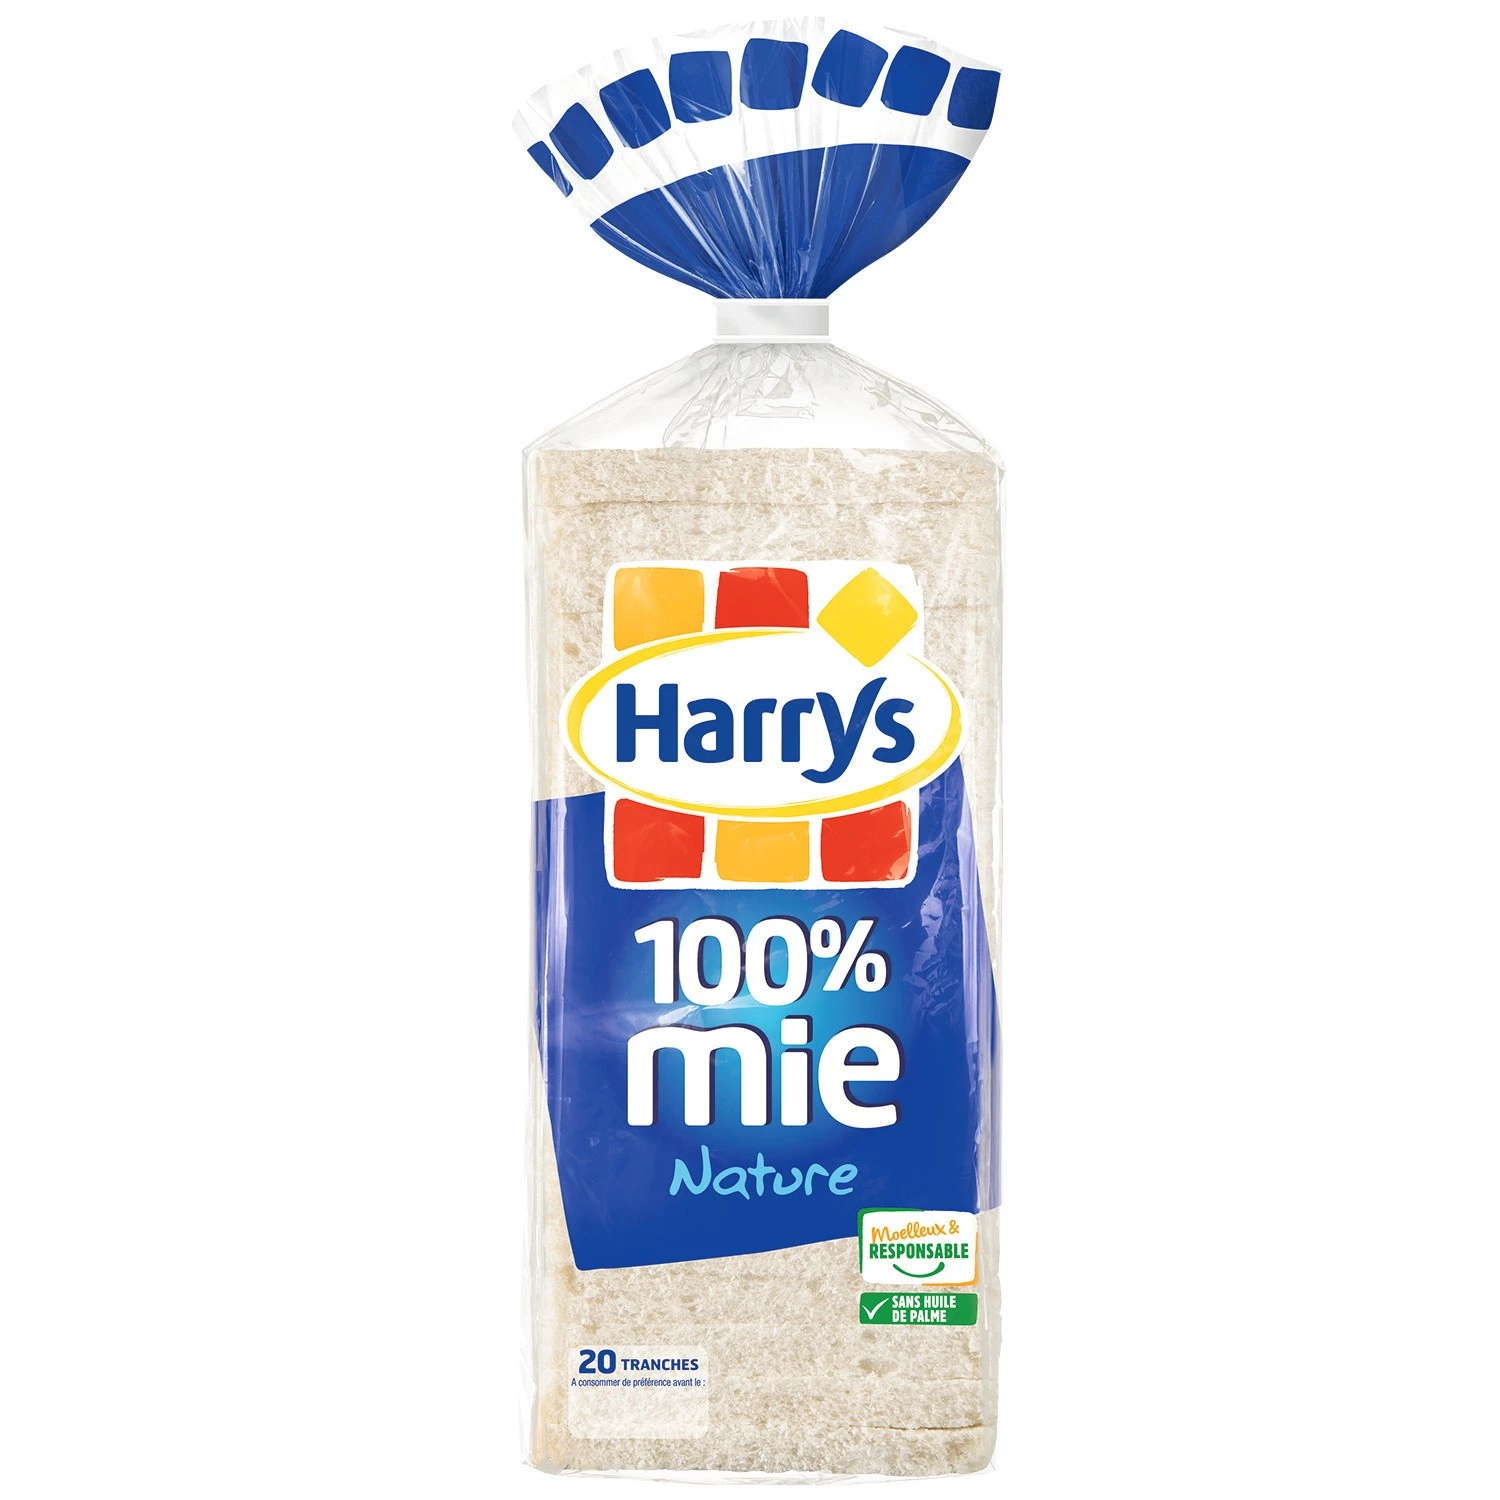 Pane semplice senza crosta x20 500g - HARRY'S